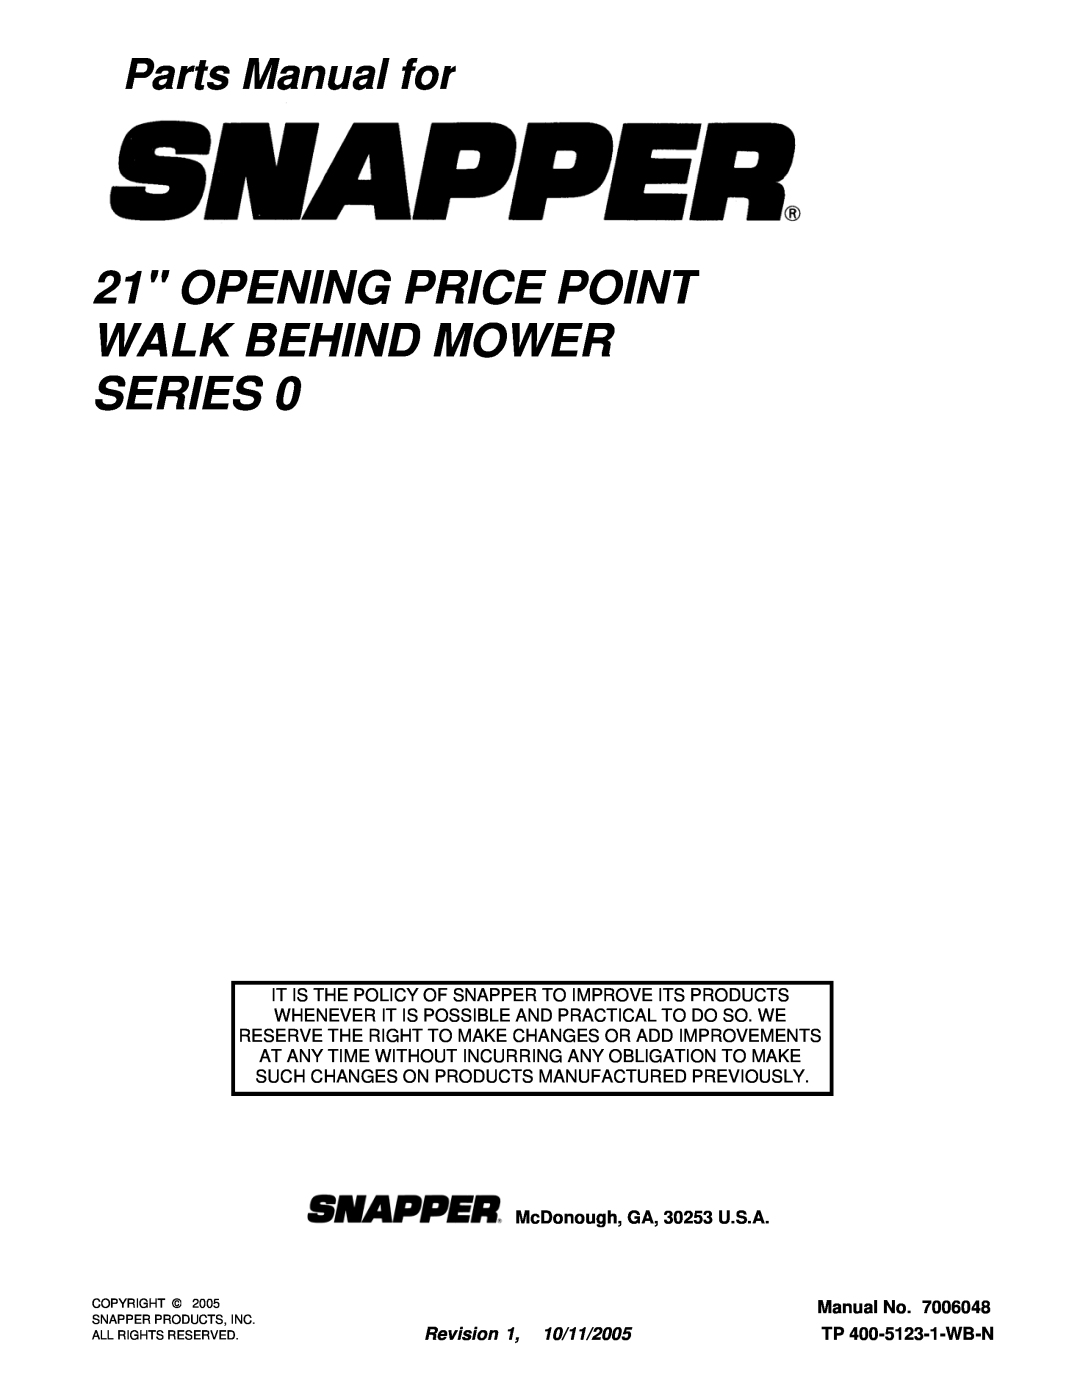 Snapper RO21380 Opening Price Point Walk Behind Mower Series, Parts Manual for, McDonough, GA, 30253 U.S.A, Manual No 